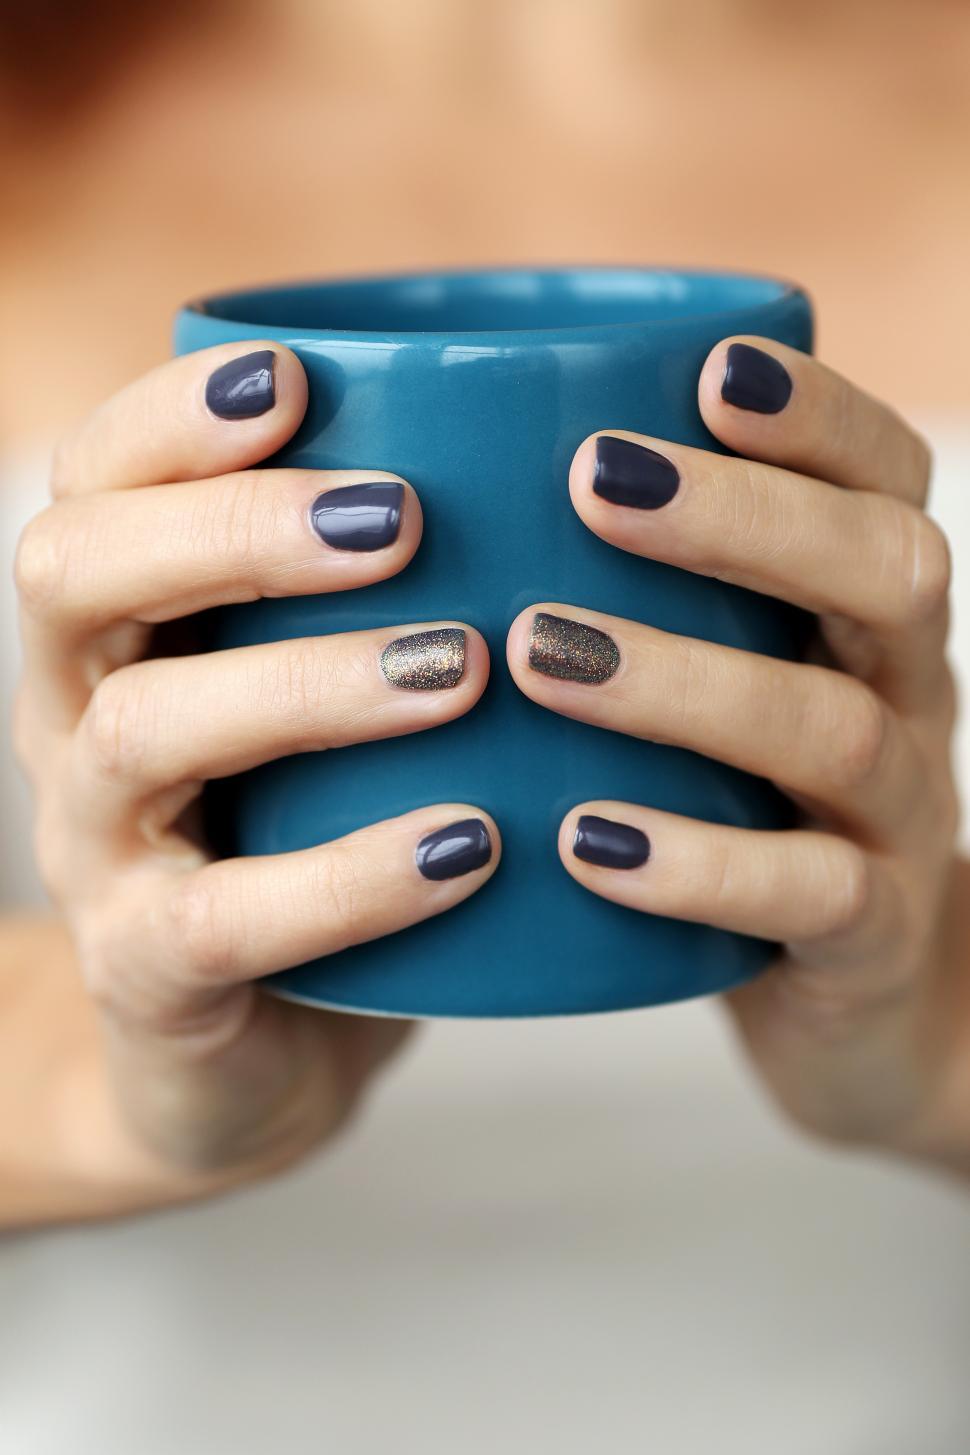 Free Image of Hands holding a blue mug 